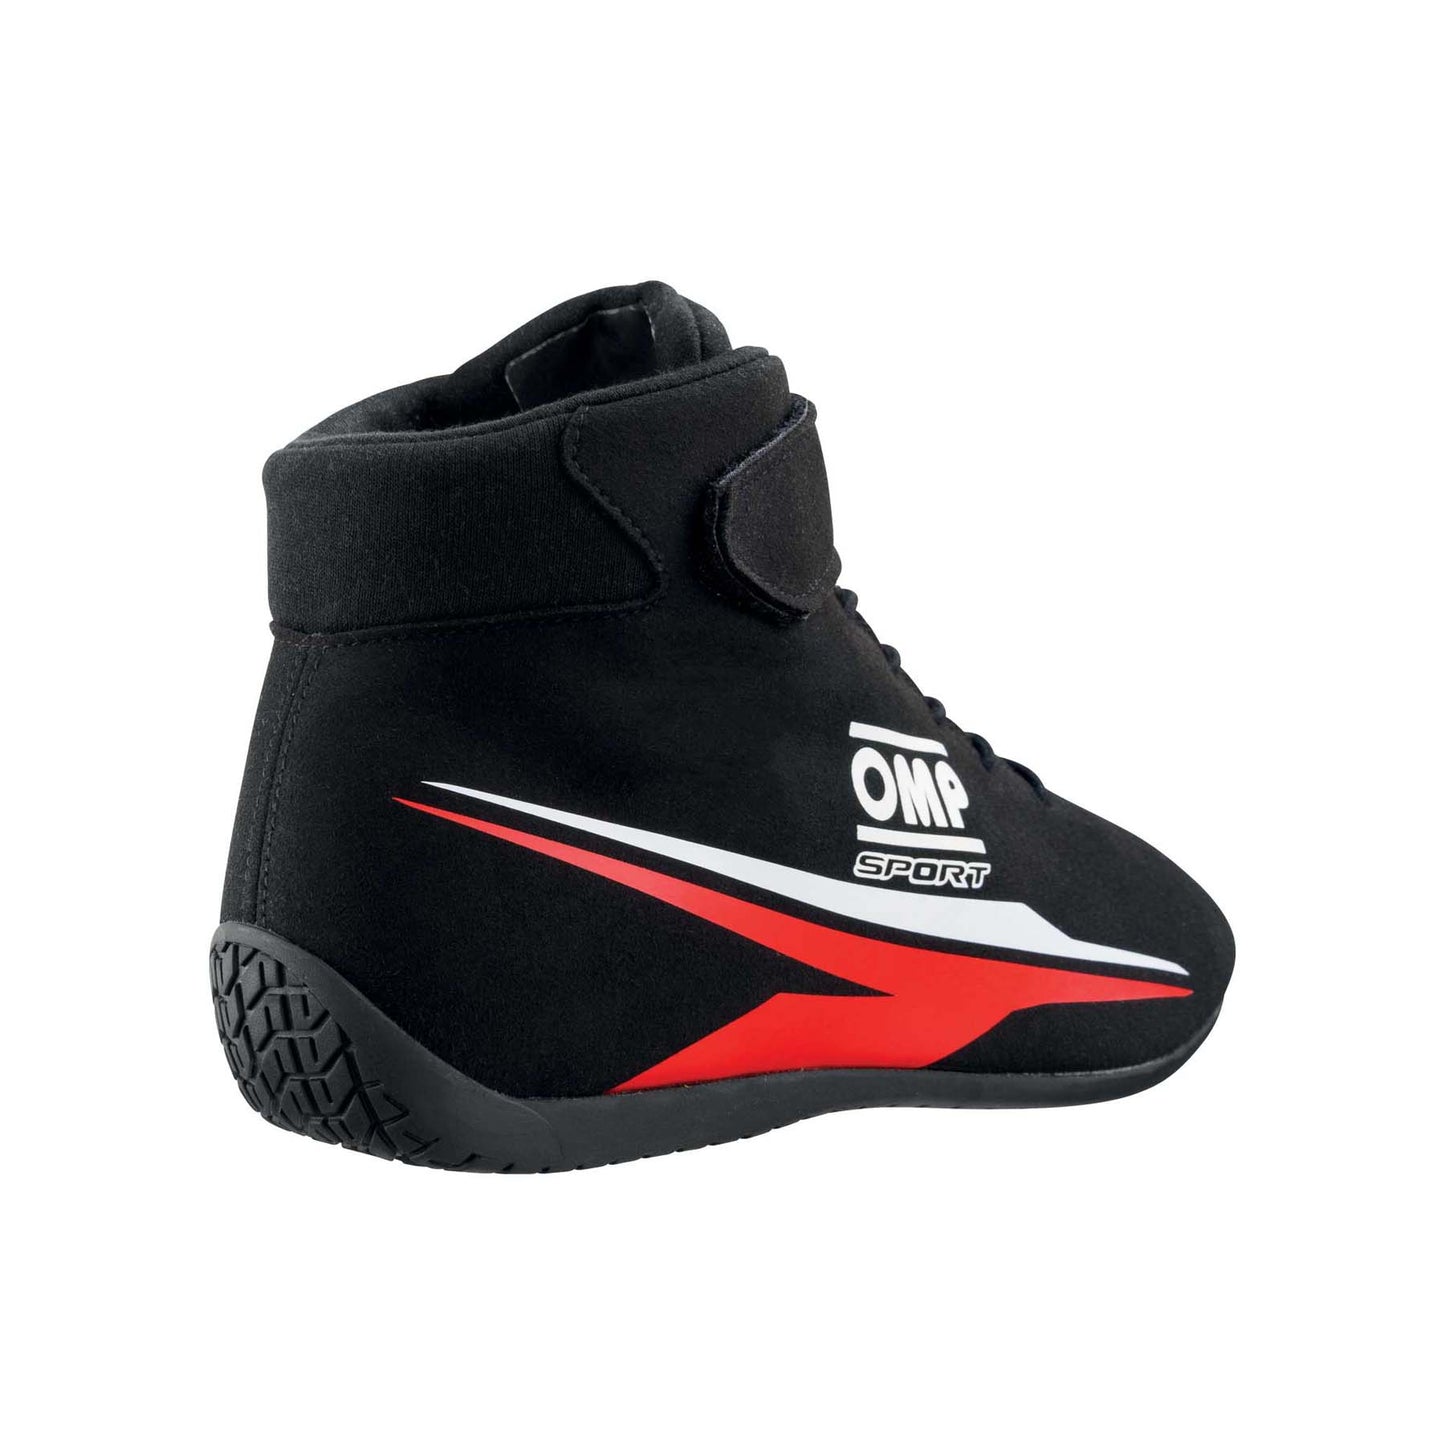 OMP Sport Racing Shoes - 2021 Model